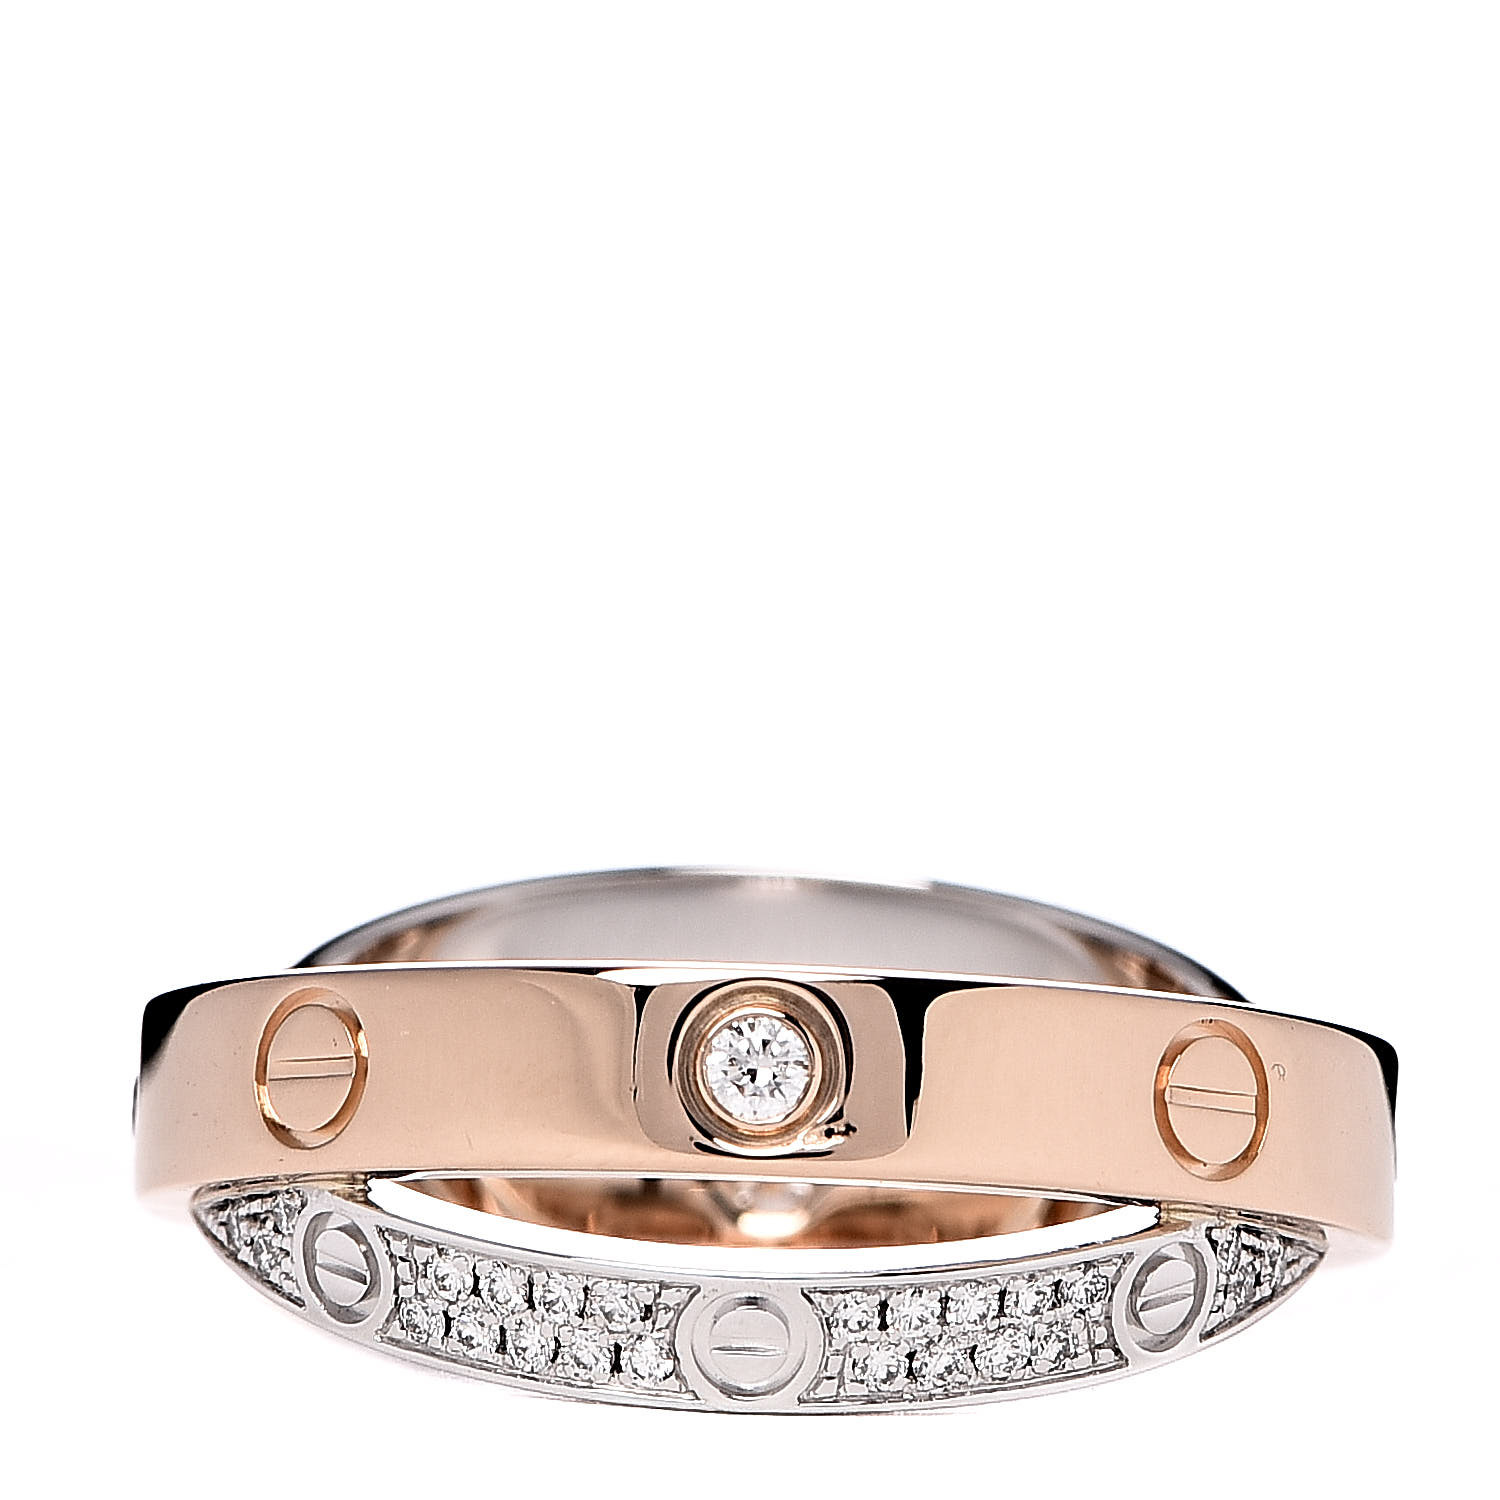 CARTIER 18K Pink White Gold Diamond Paved LOVE Ring 51 5.75 513722